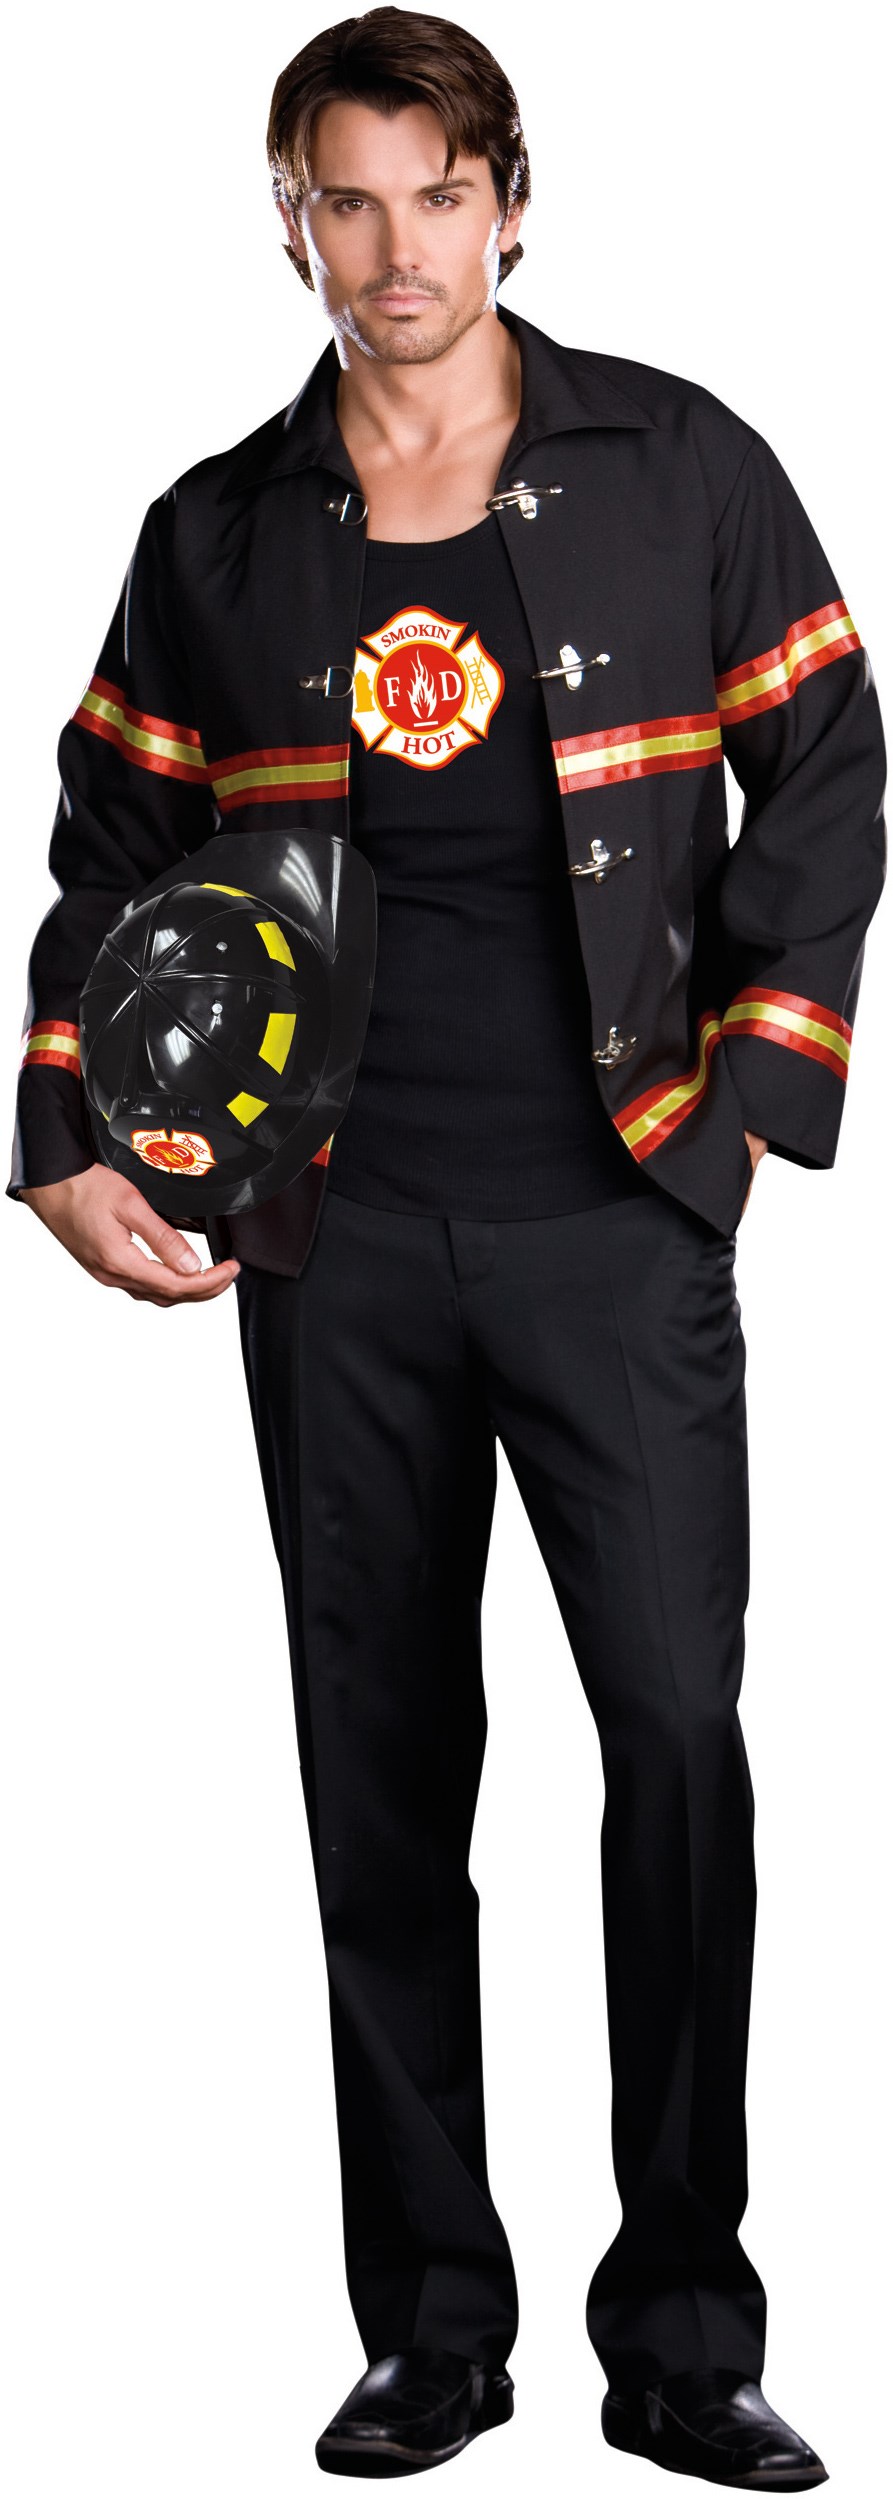 Smokin Hot Fire Department Man Adult Costume